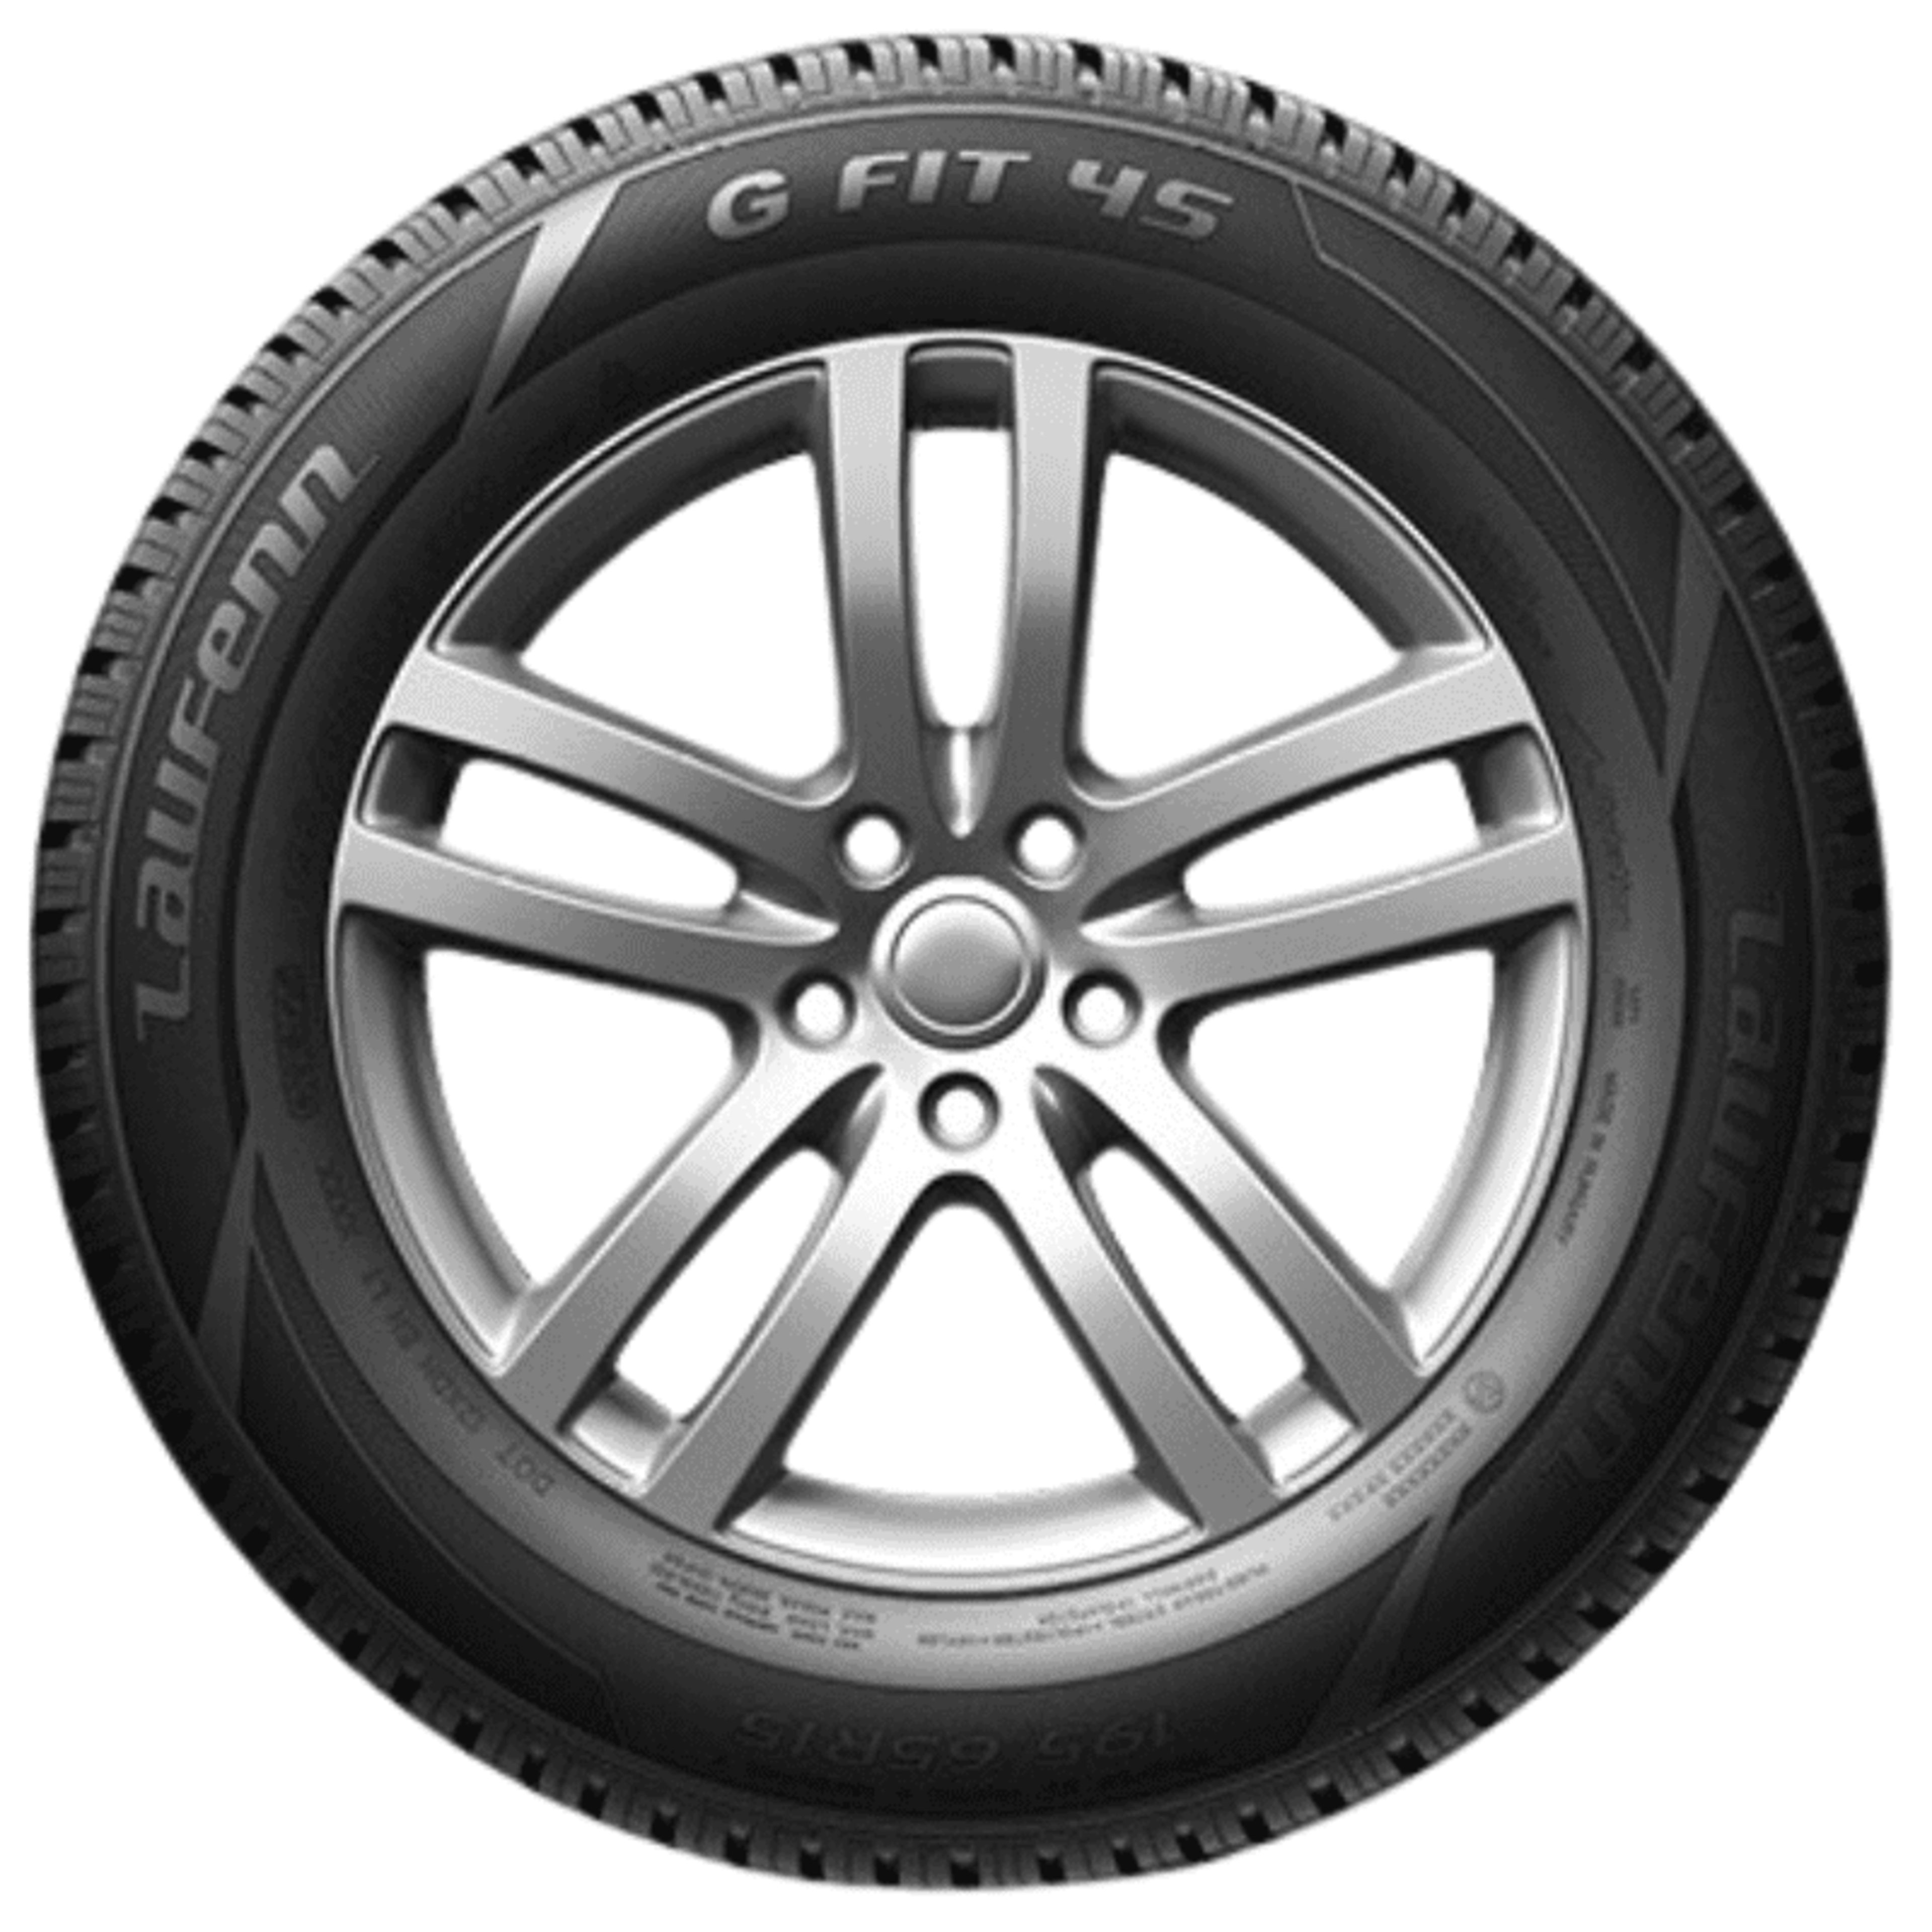 Buy Laufenn G FIT 4S | Tires SimpleTire Online